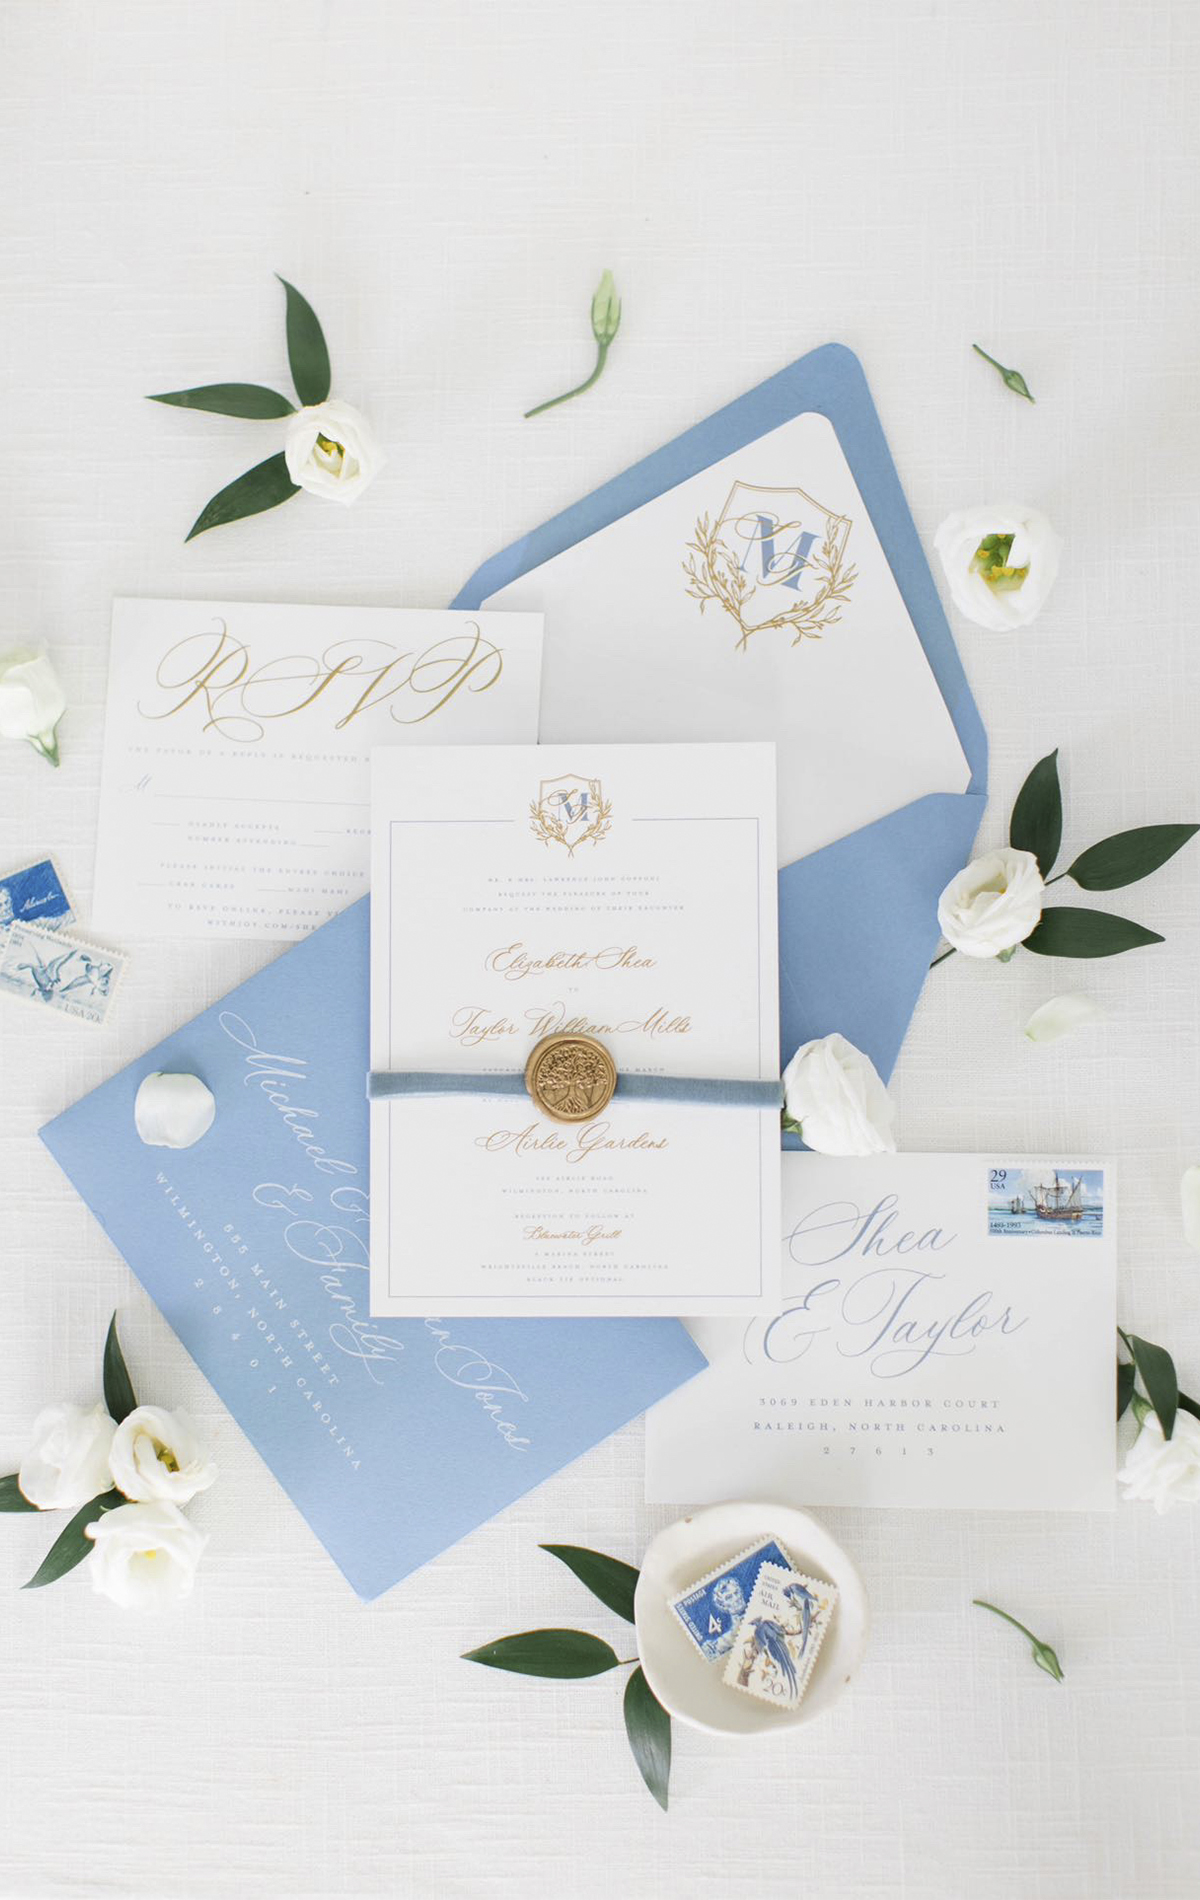 Alexis Scott - Home Website Slider Image - Blue and white classic invitation set